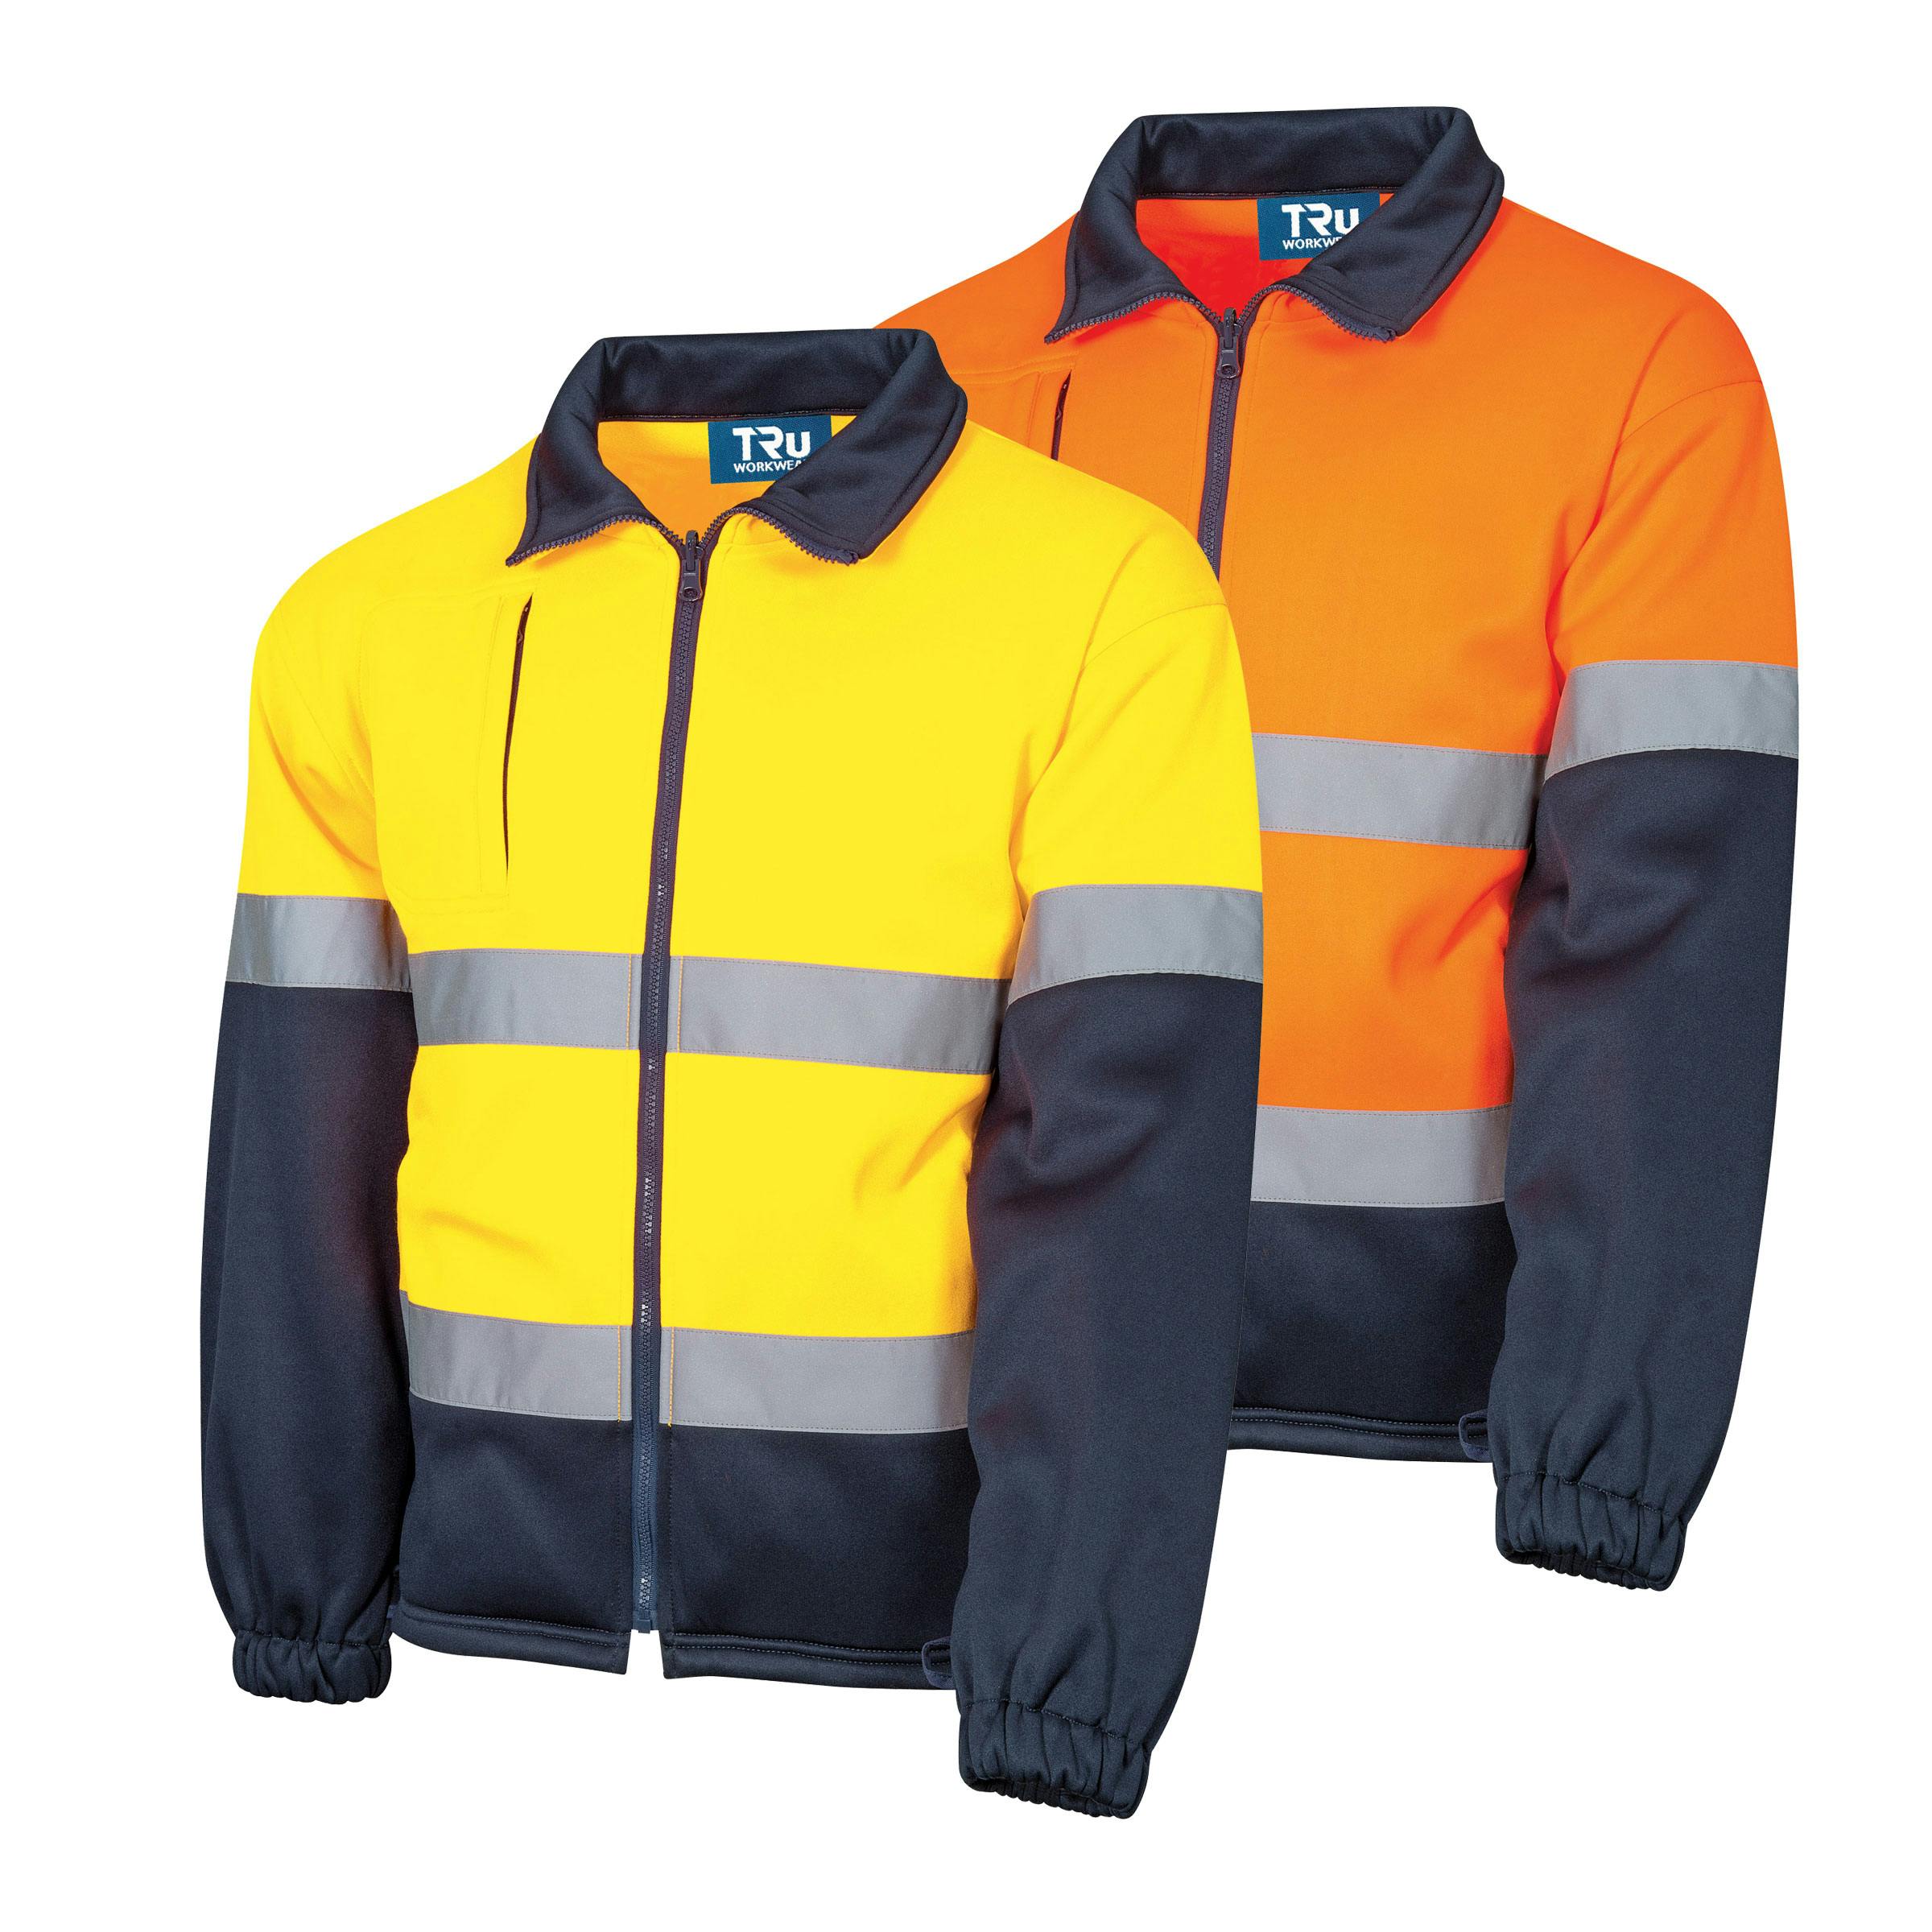 TRu Workwear Jacket Polyester Fleece Water Repellent With Tru Reflective Tape In 2 Hoop Pattern